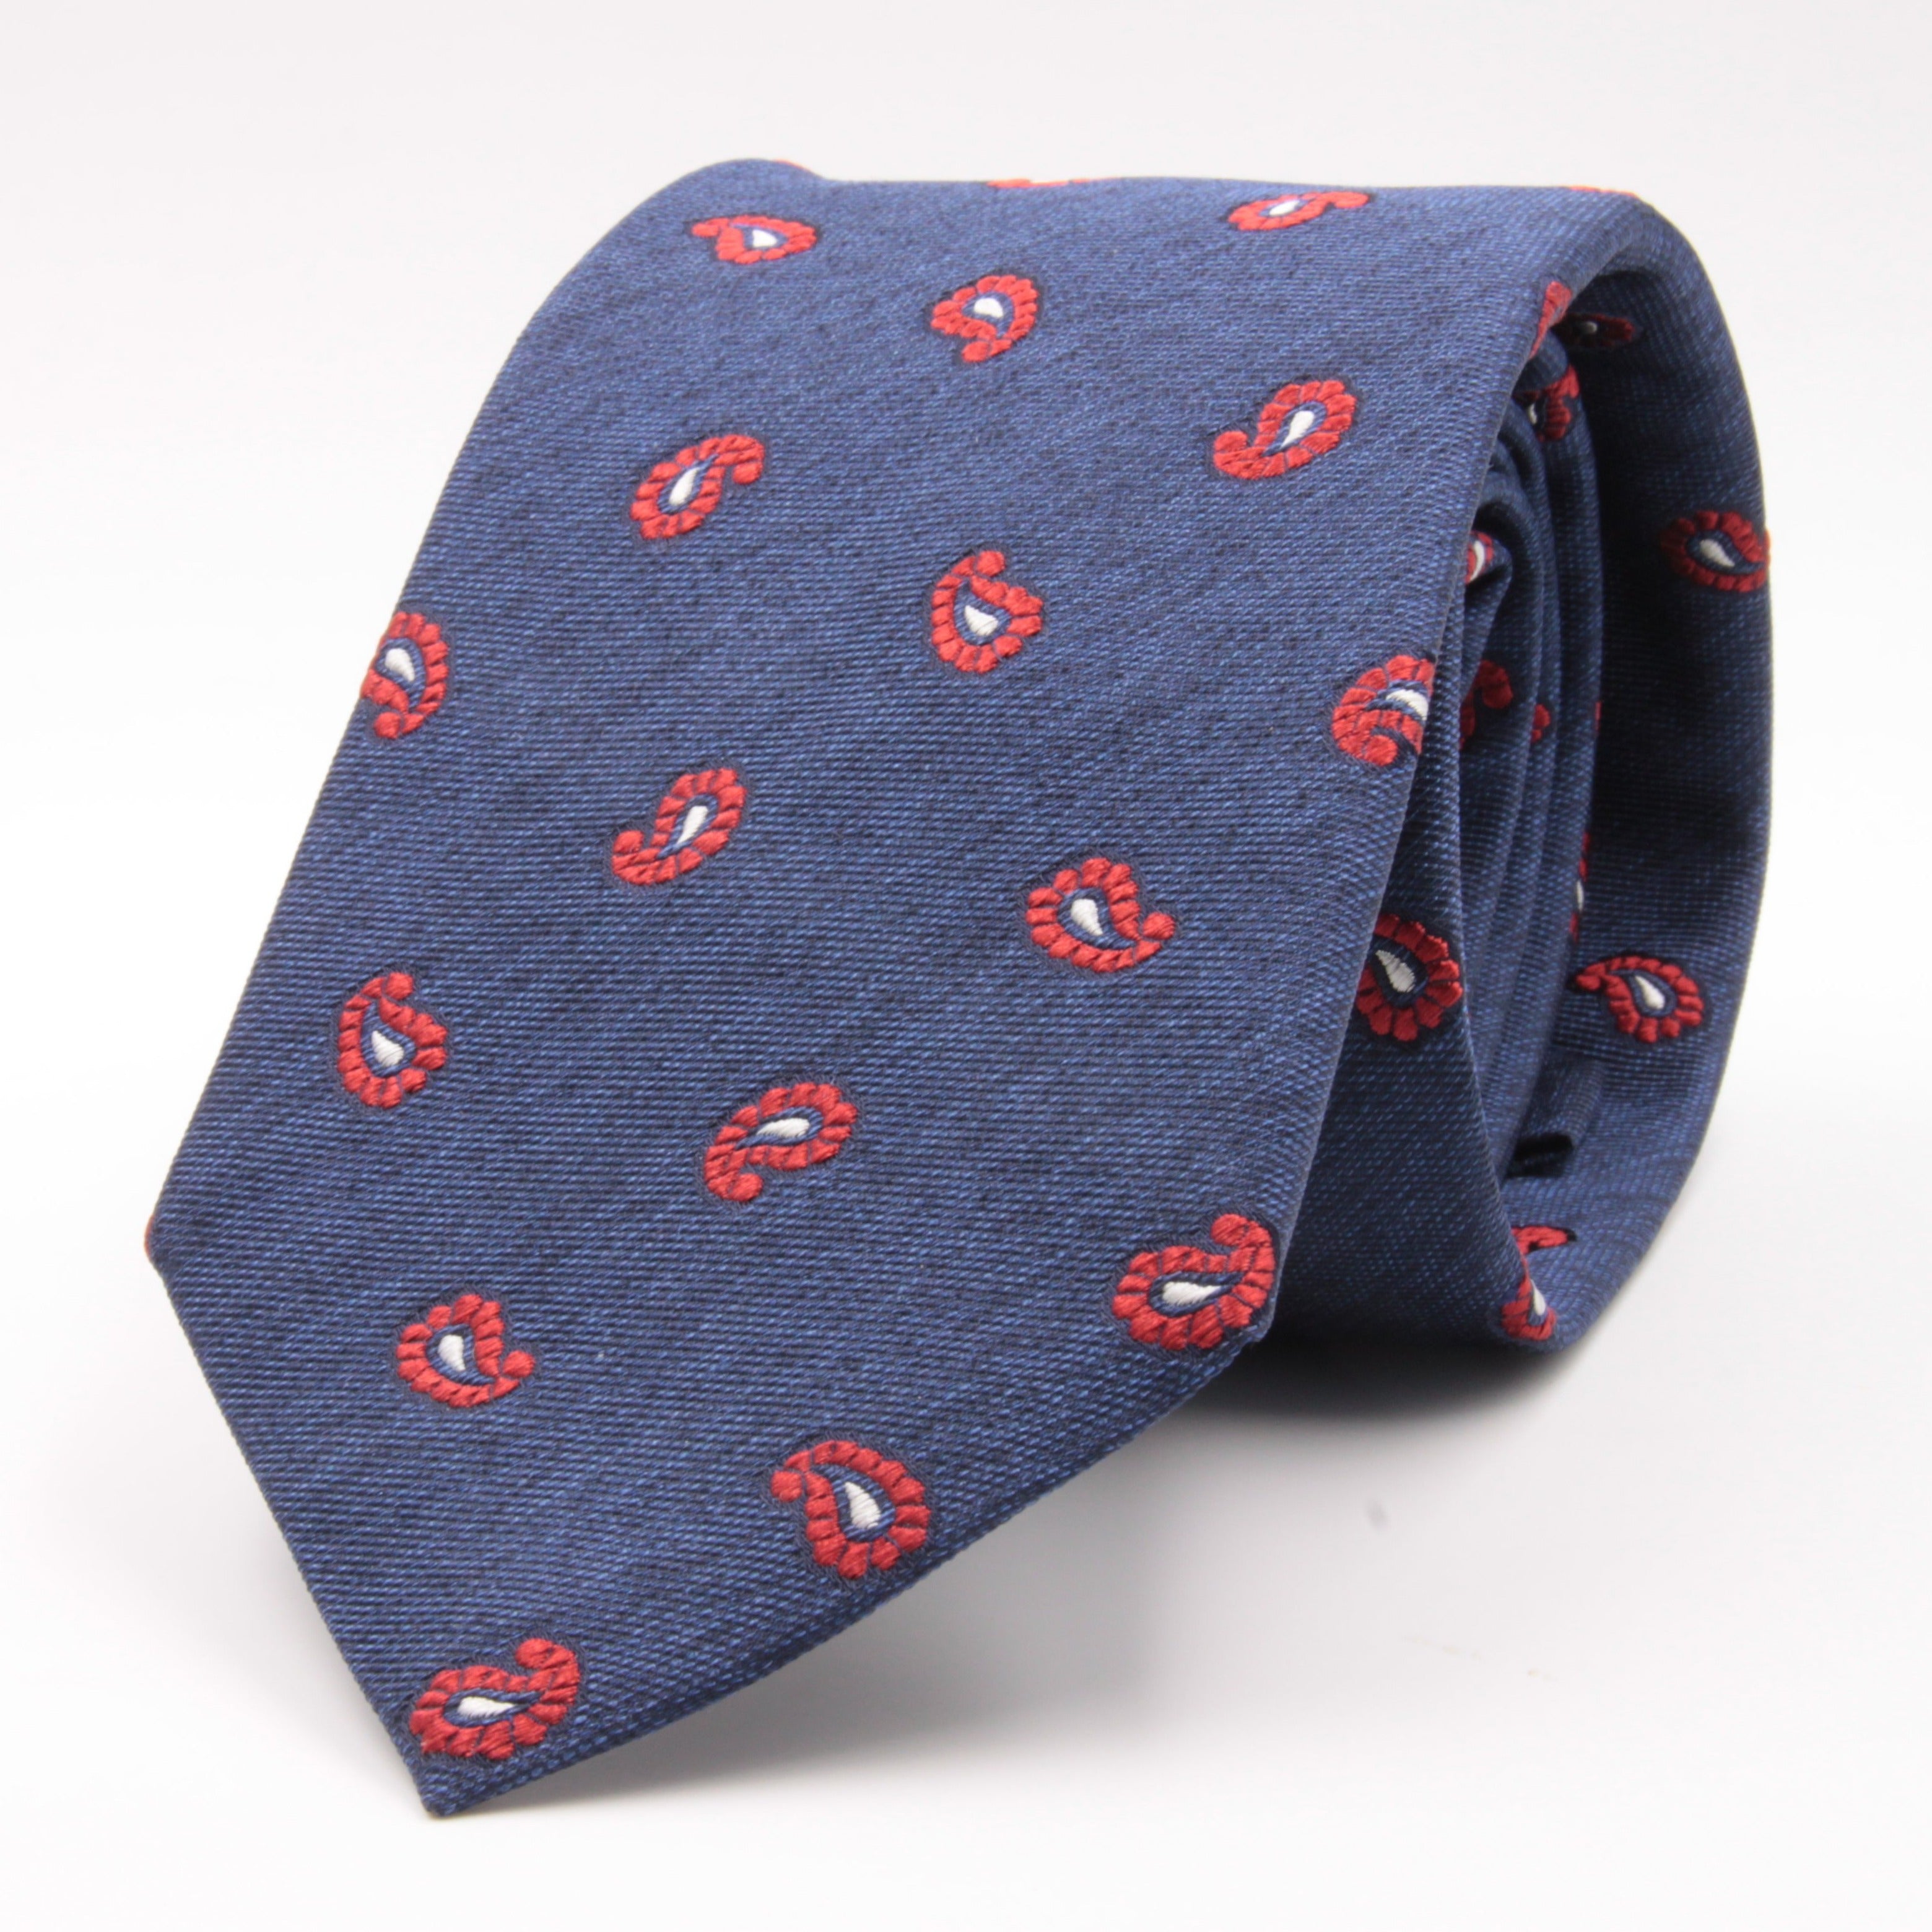 Cruciani & Bella 100% Silk Jacquard  Denim Blue and Red Paisley Tie Handmade in Italy 8 cm x 150 cm #4440  